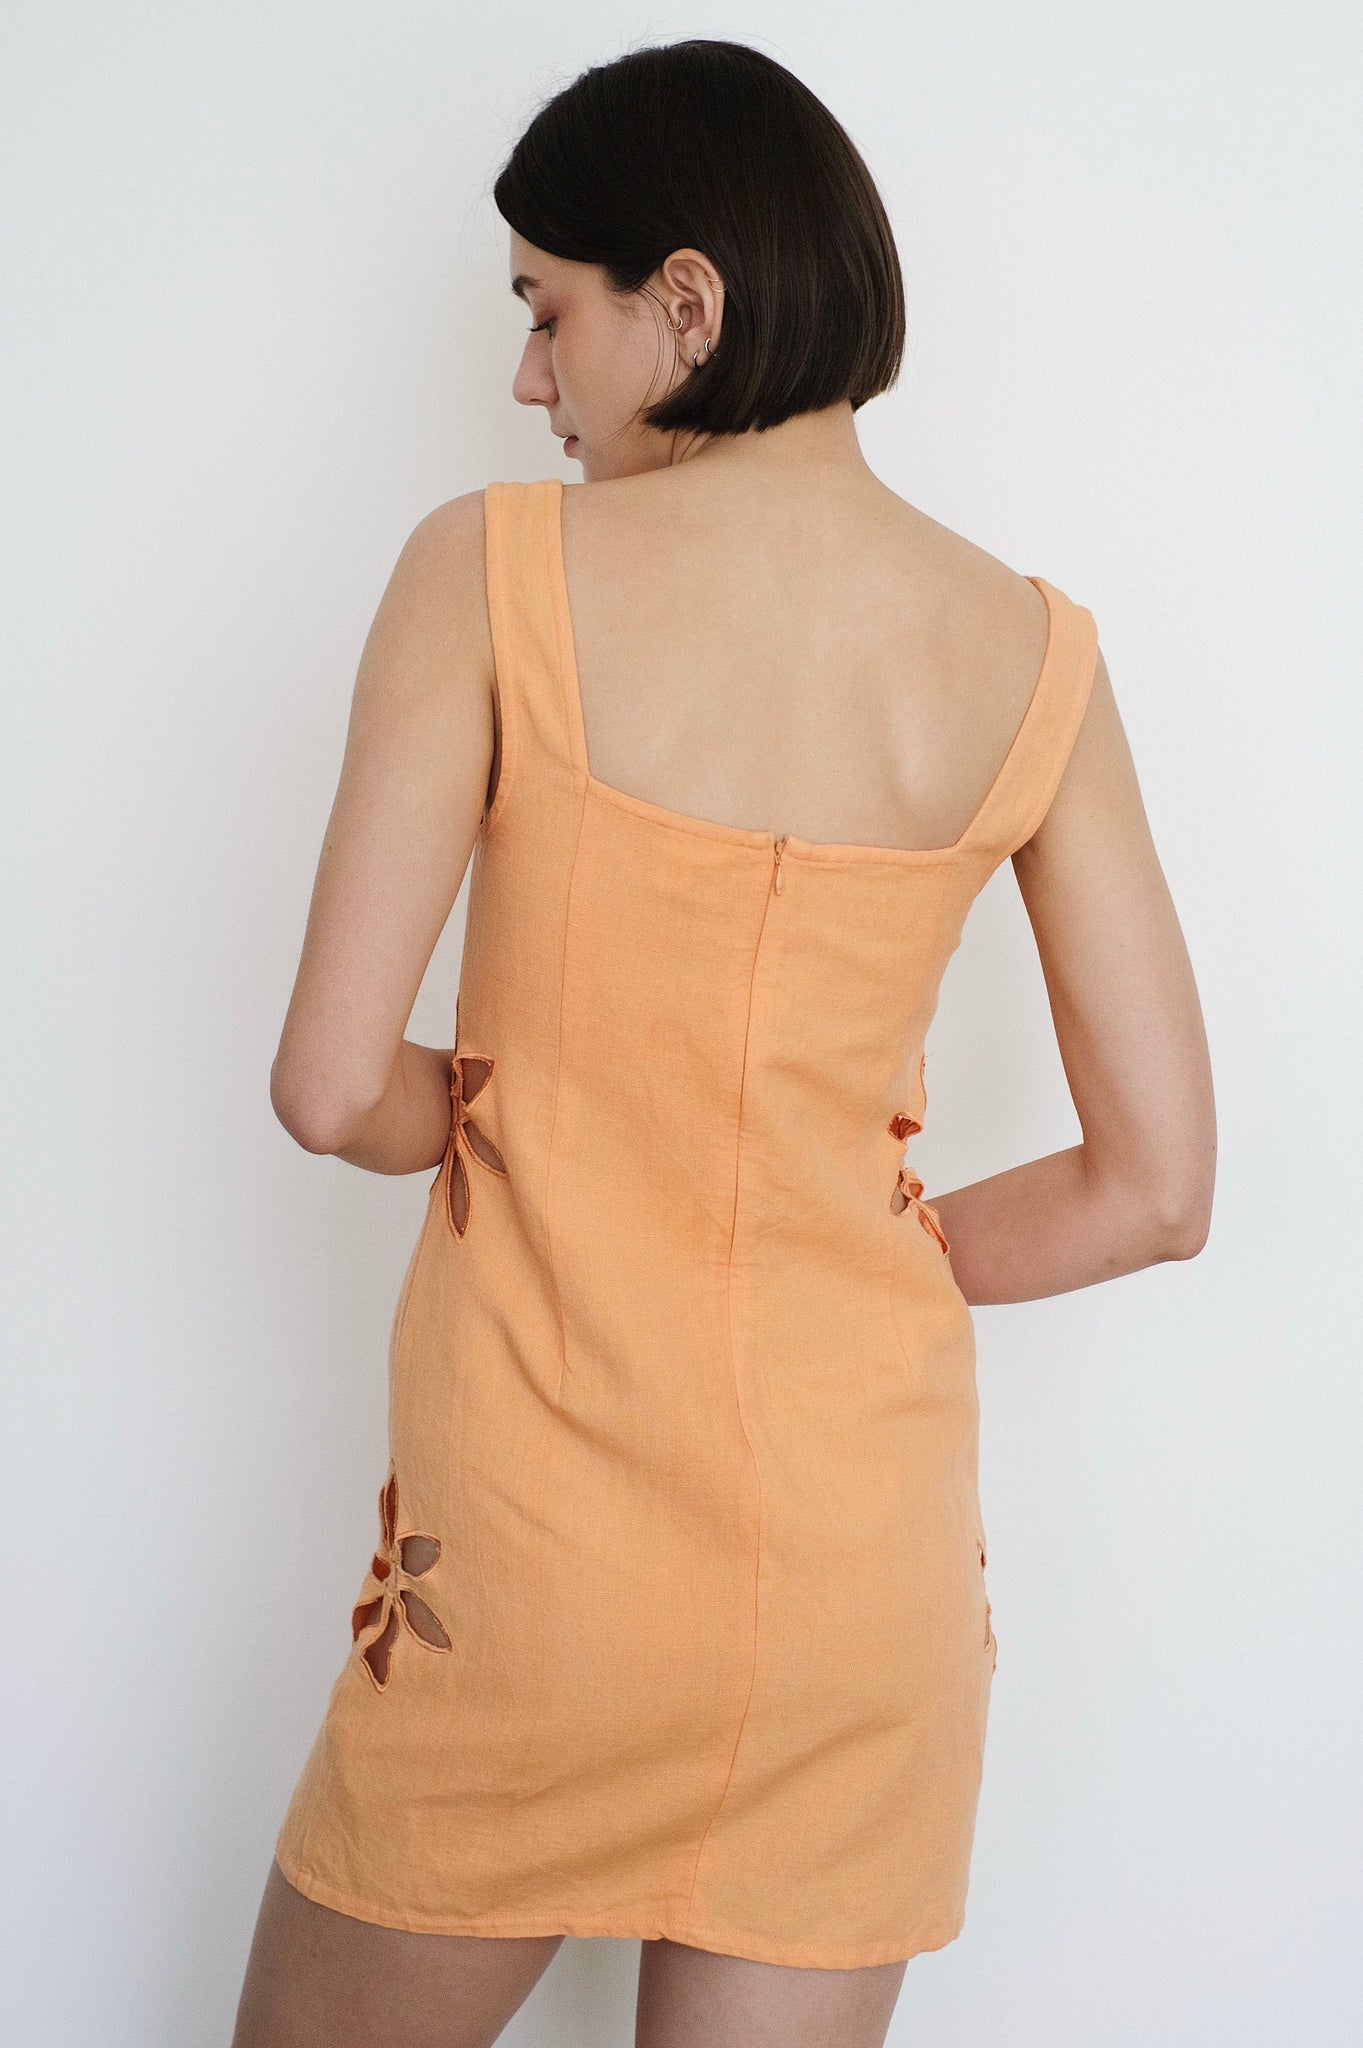 Tach Afrodita Mini Dress in Light Orange Linen with Floral Cutouts